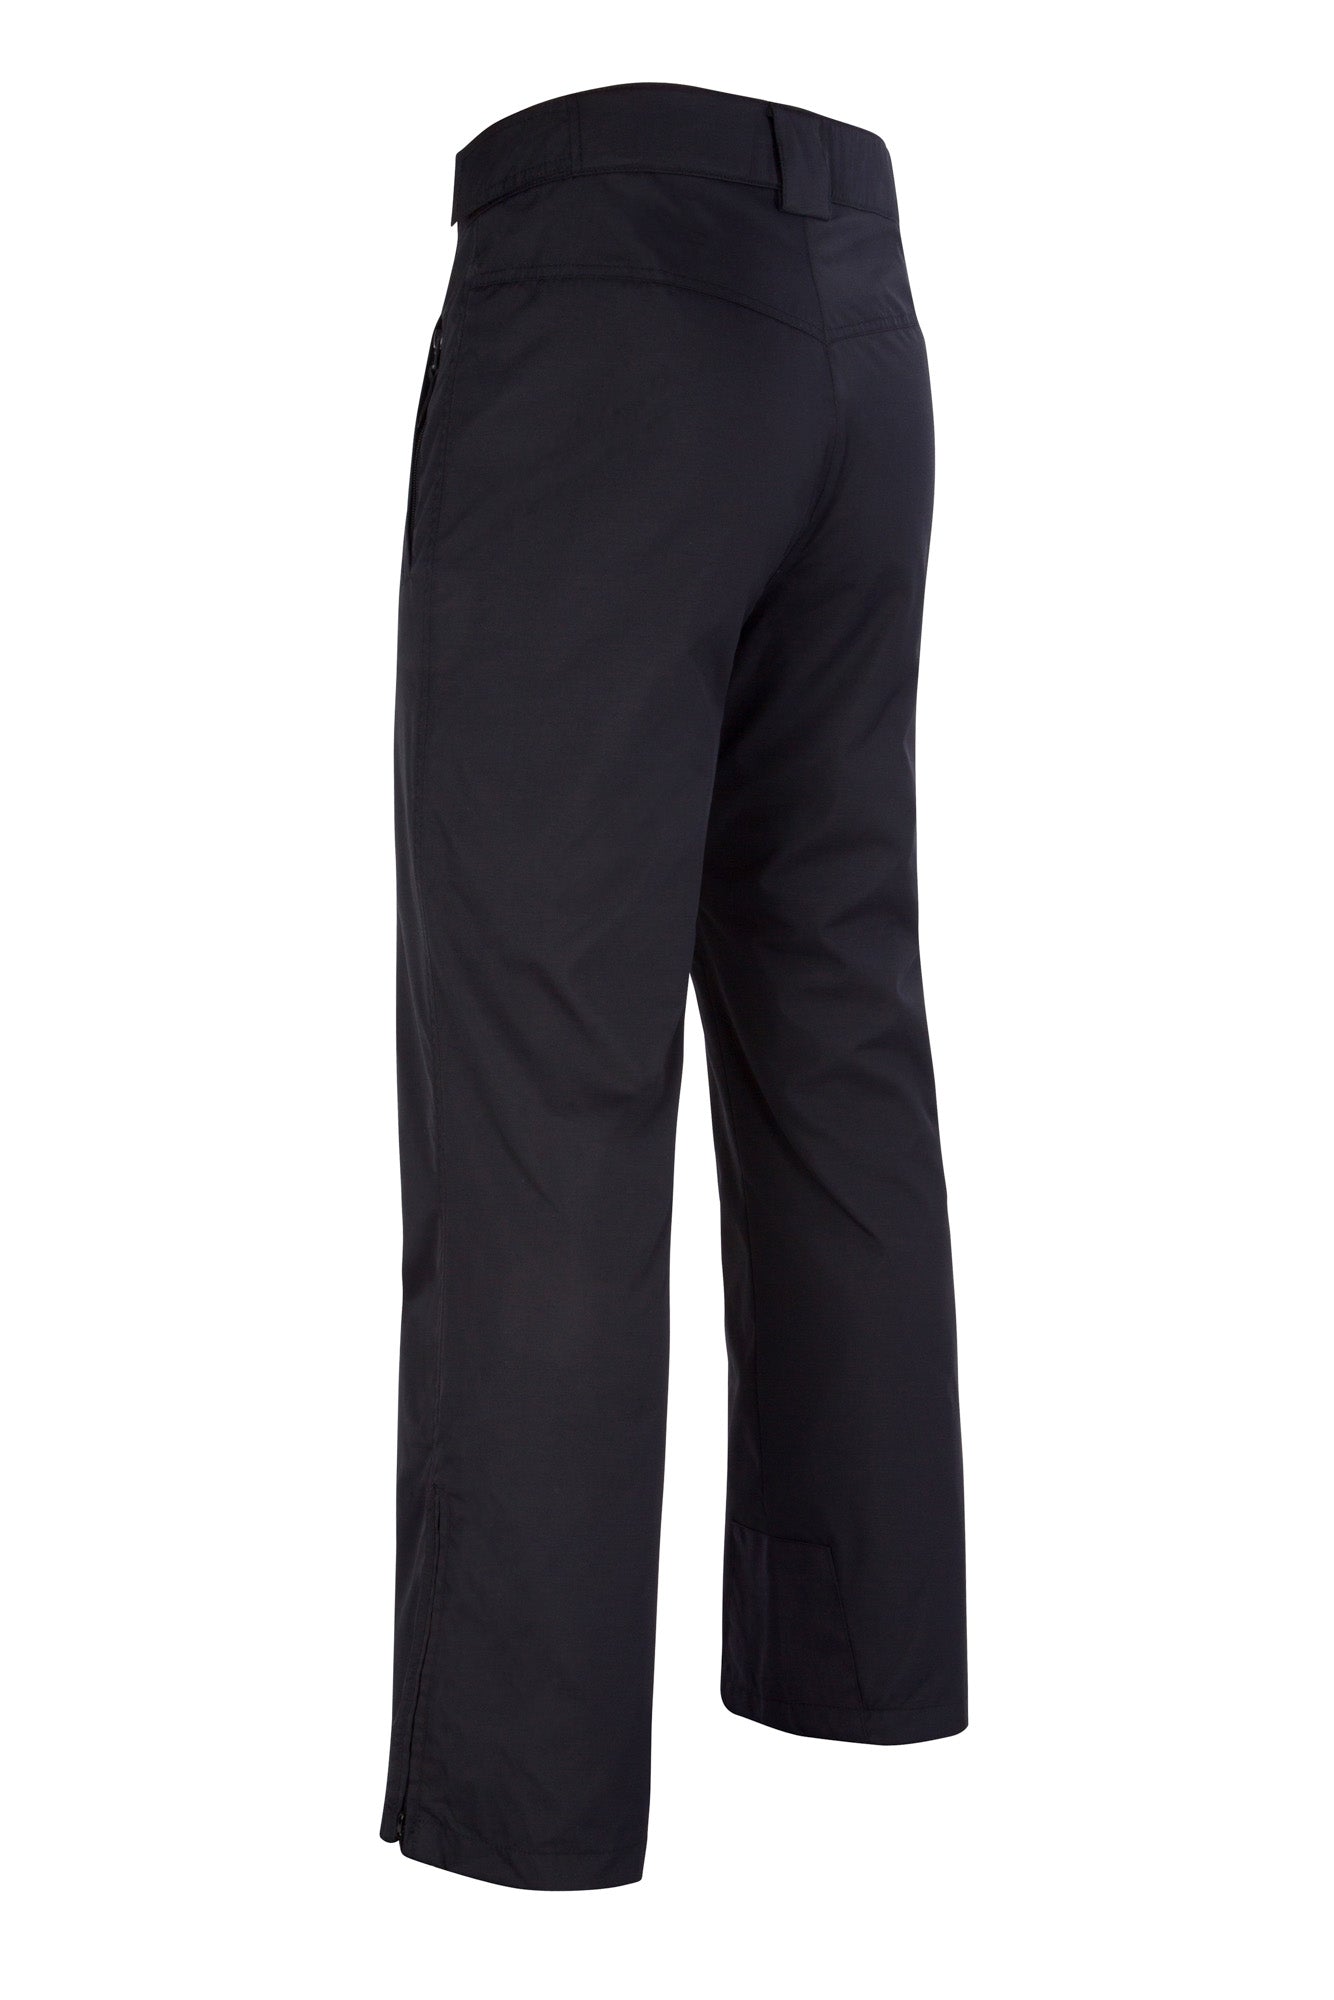 Columbia Men's Royce Range Pants | eBay